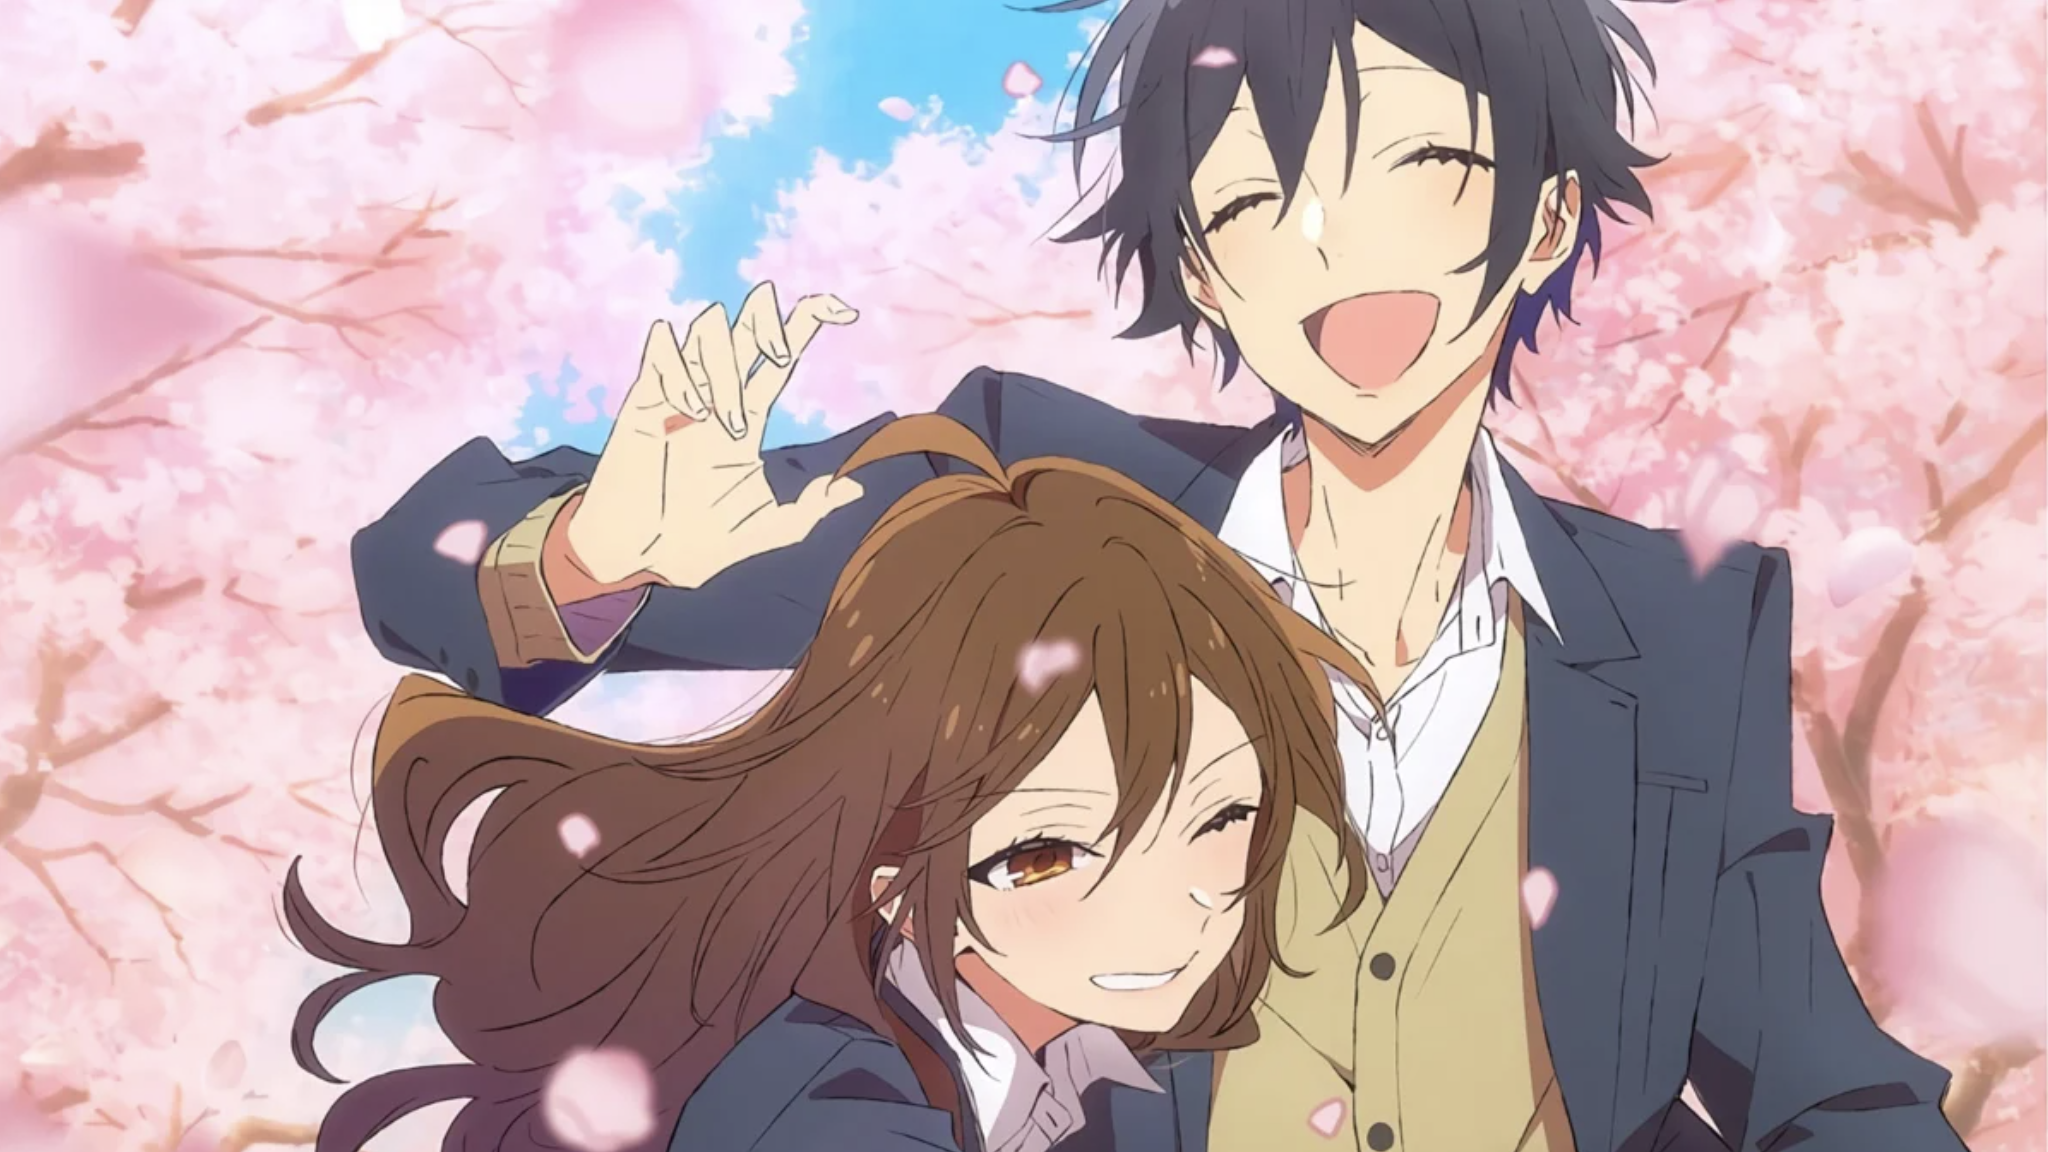 Absolutely love the new anime HoriMiya! Super cute 🥰 love their